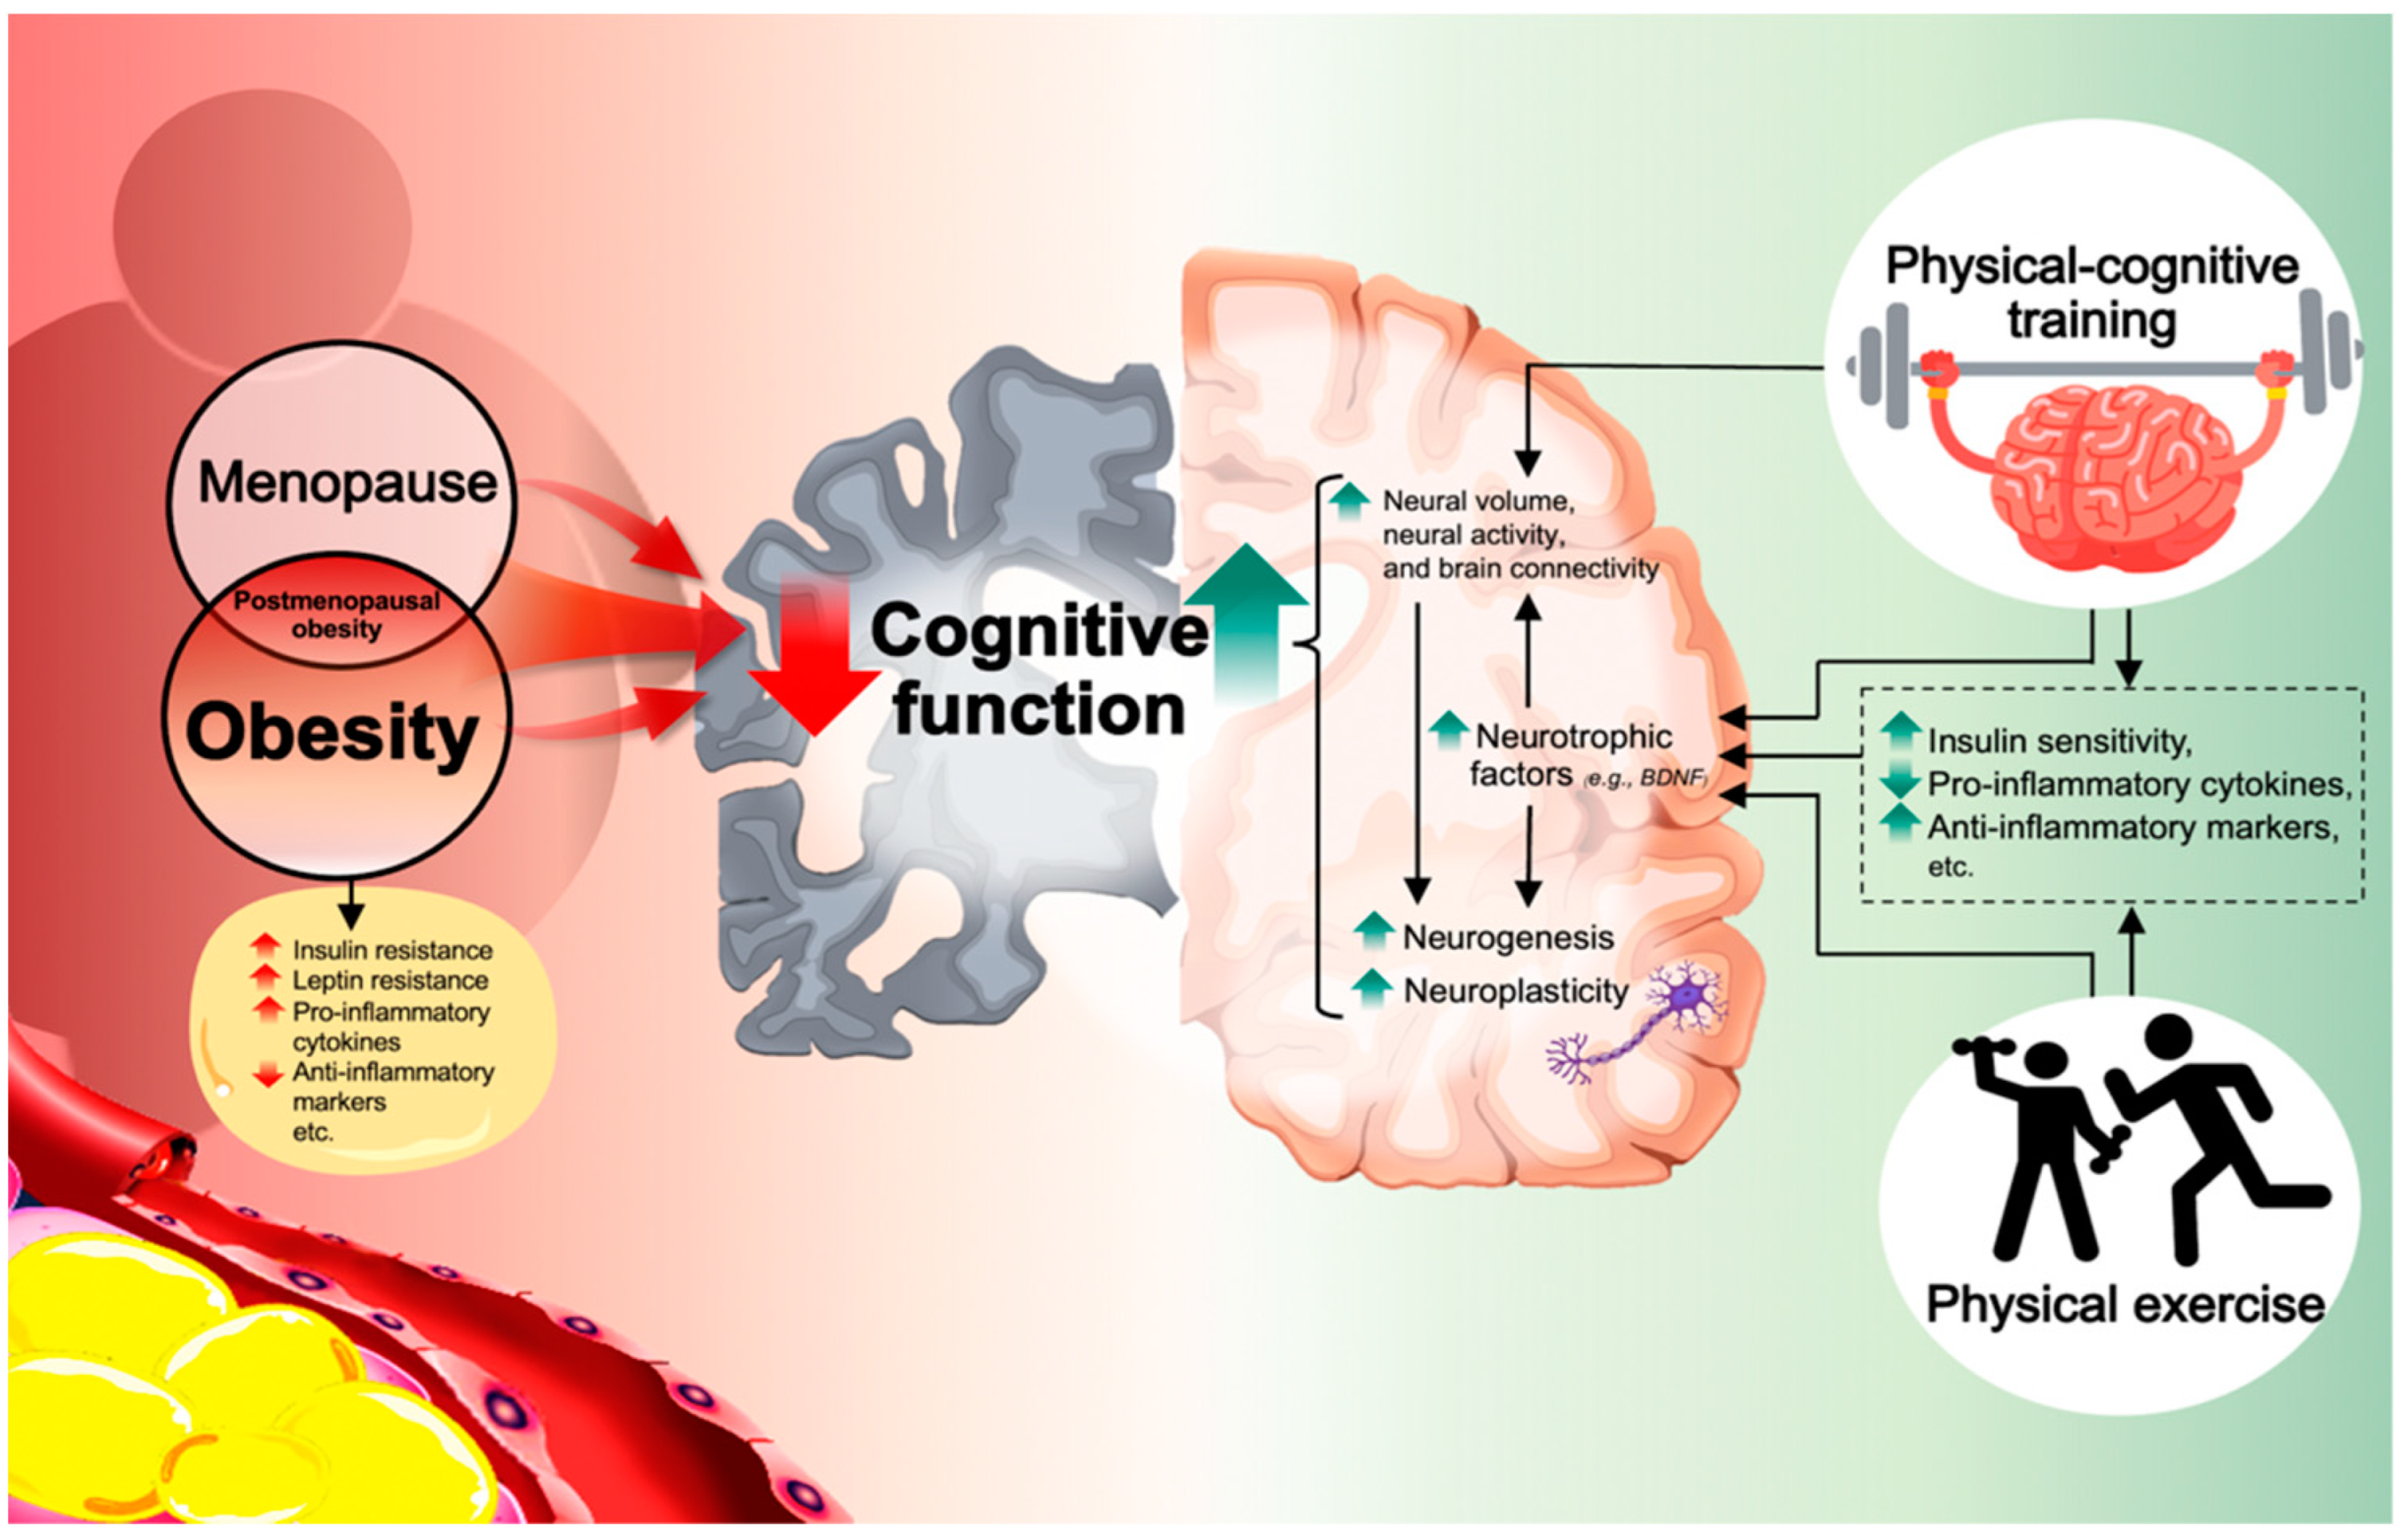 Cognitive function enhancement activities